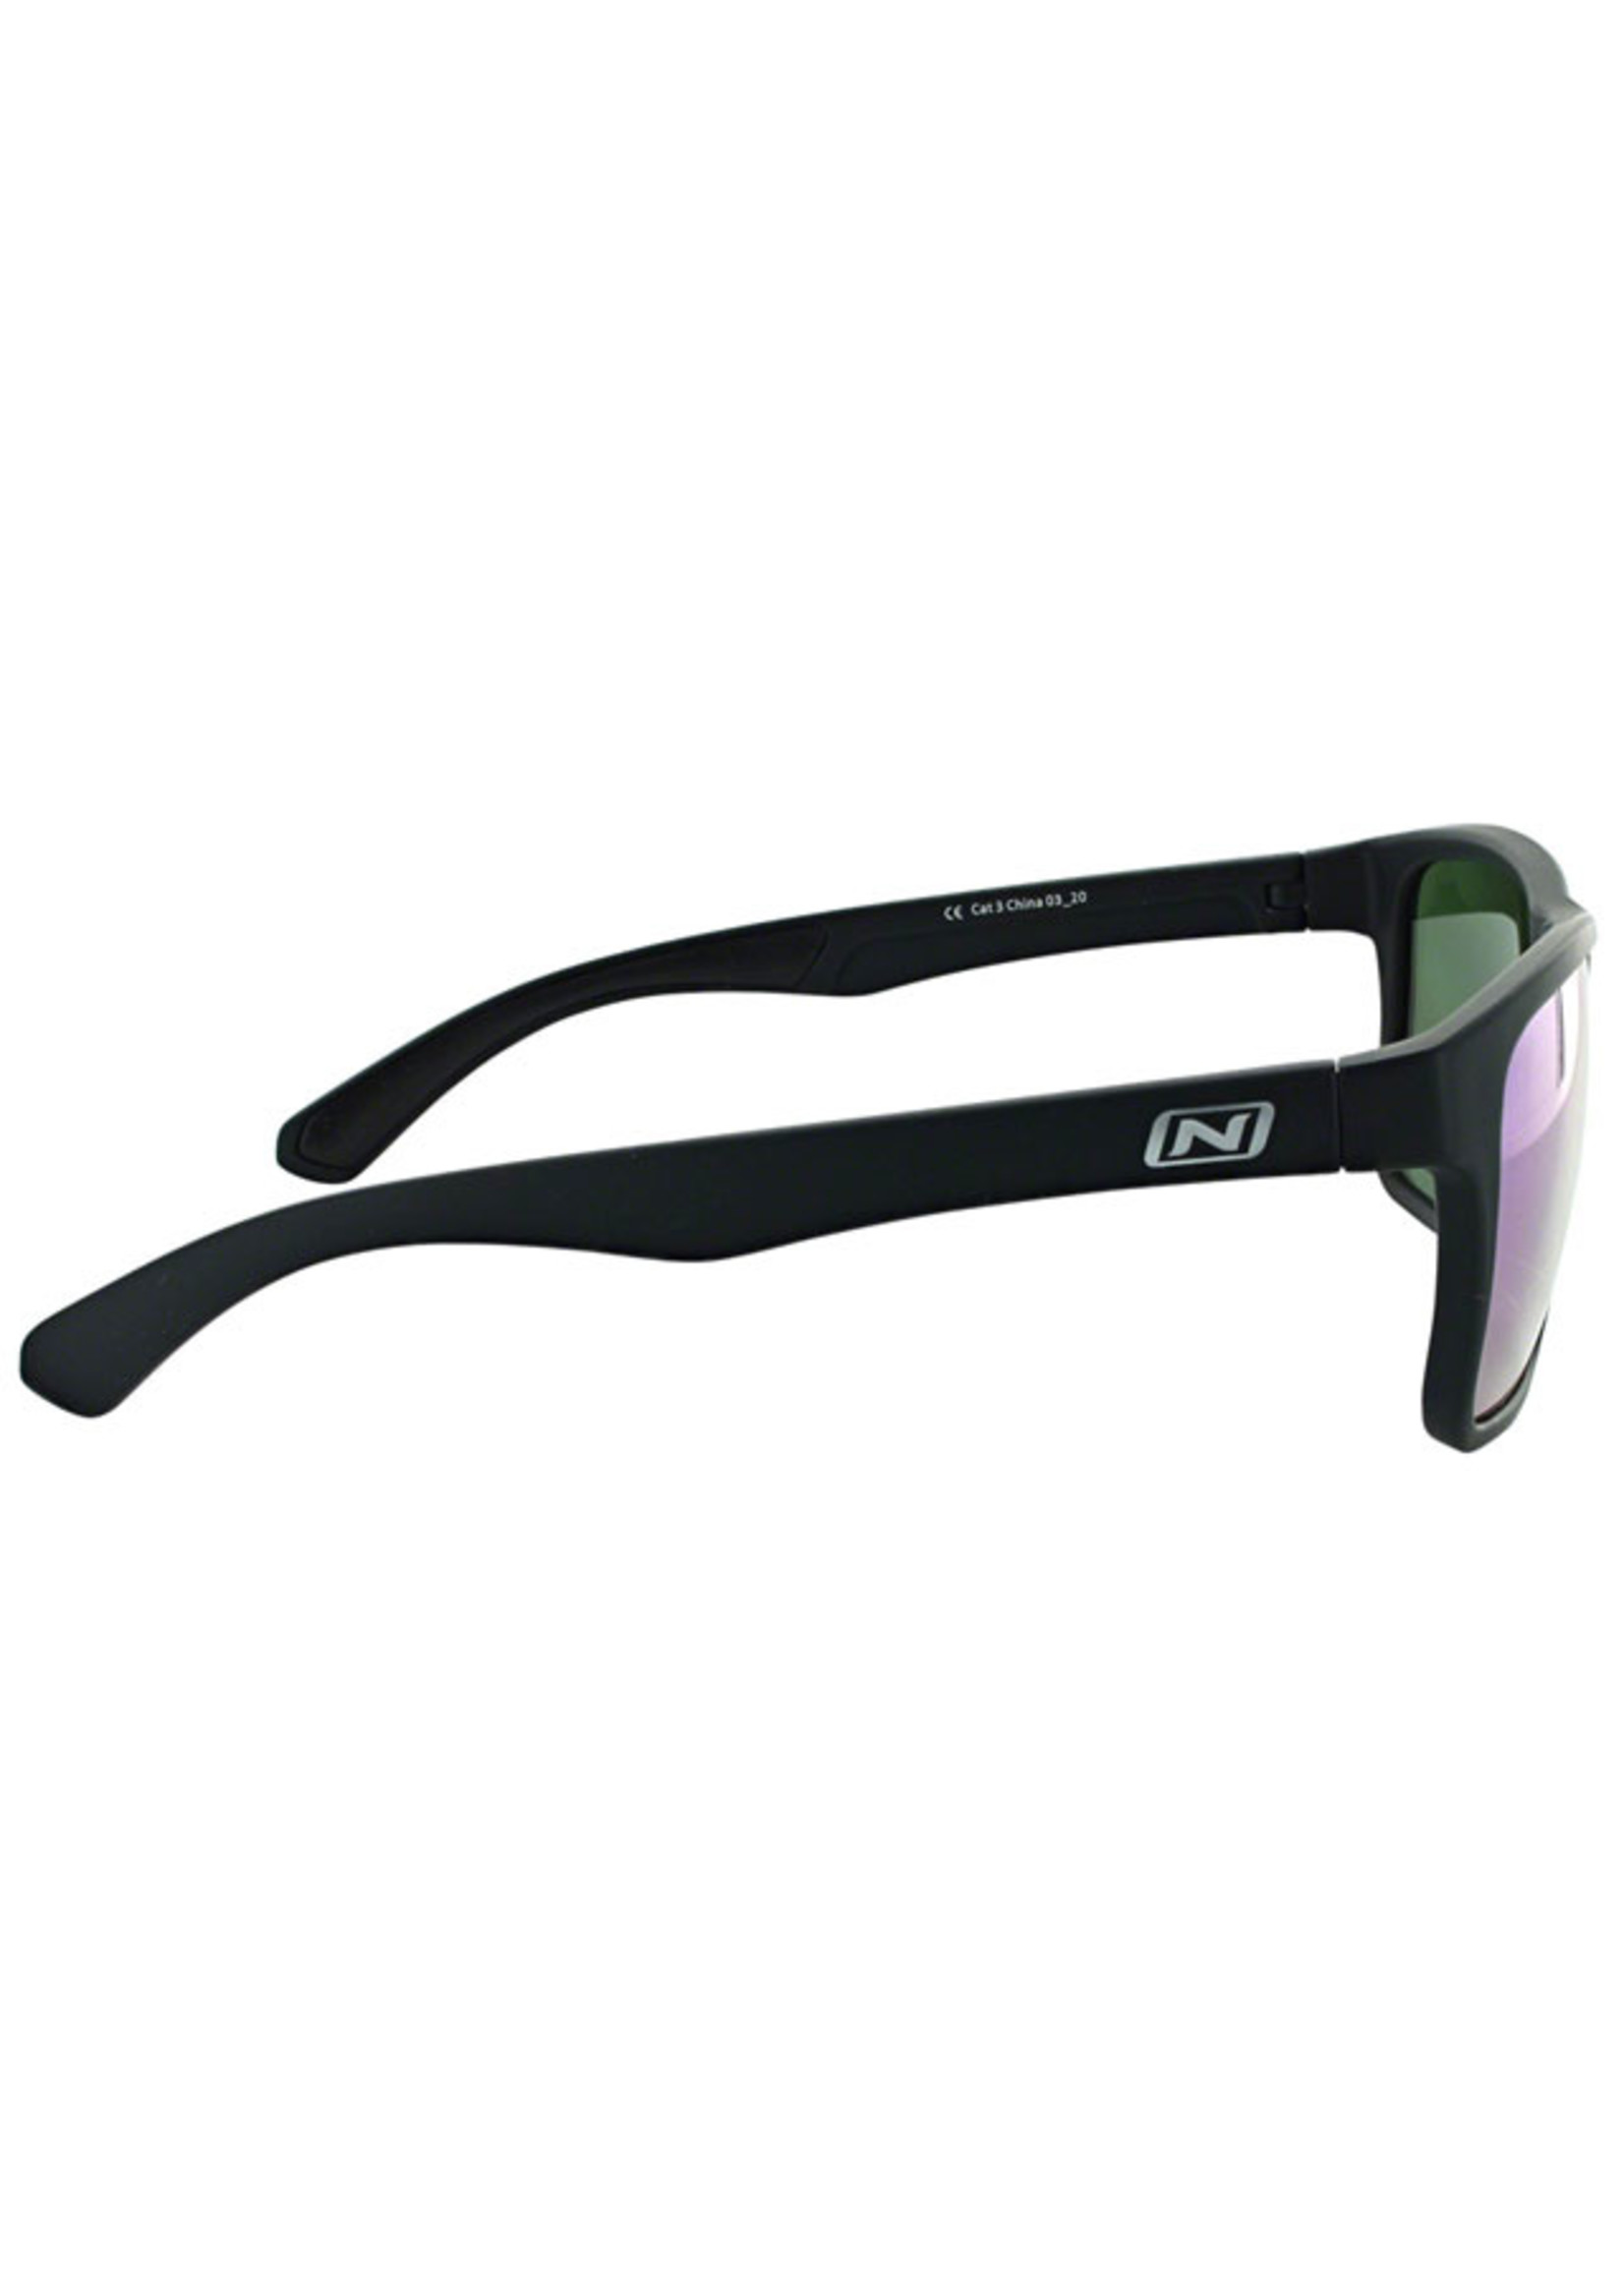 Optic Nerve Optic Nerve Rumble Sunglasses - Matte Black Polarized Smoke Lens with Green Mirror